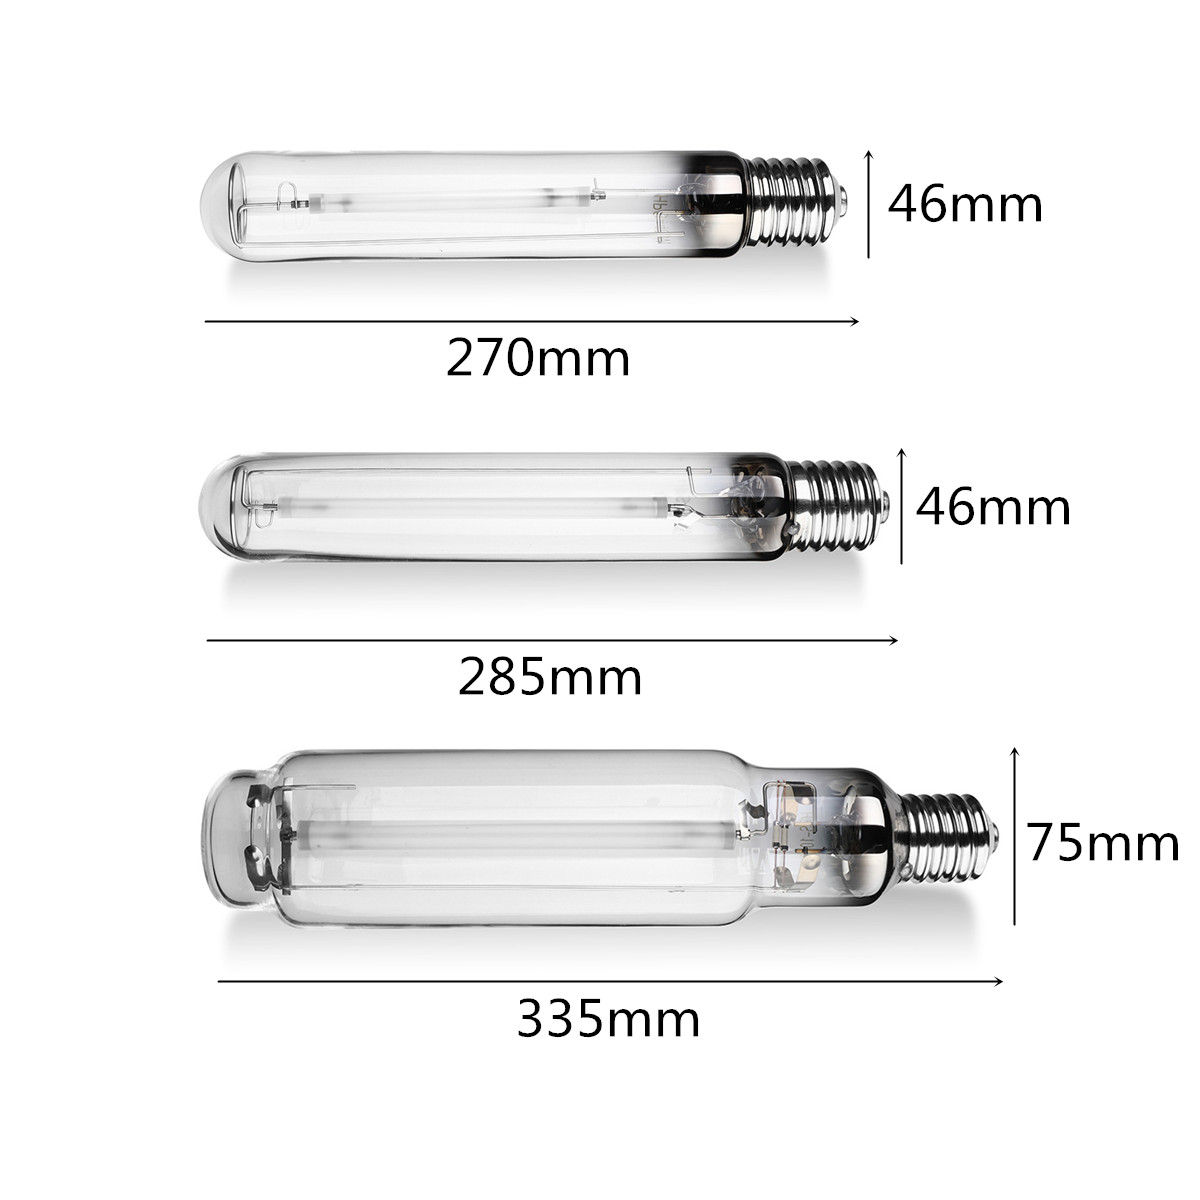 220V-HPS-High-Pressure-Sodium-Lamp-Bulb-Hydroponic-Plant-Grow-Light-Garden-1632488